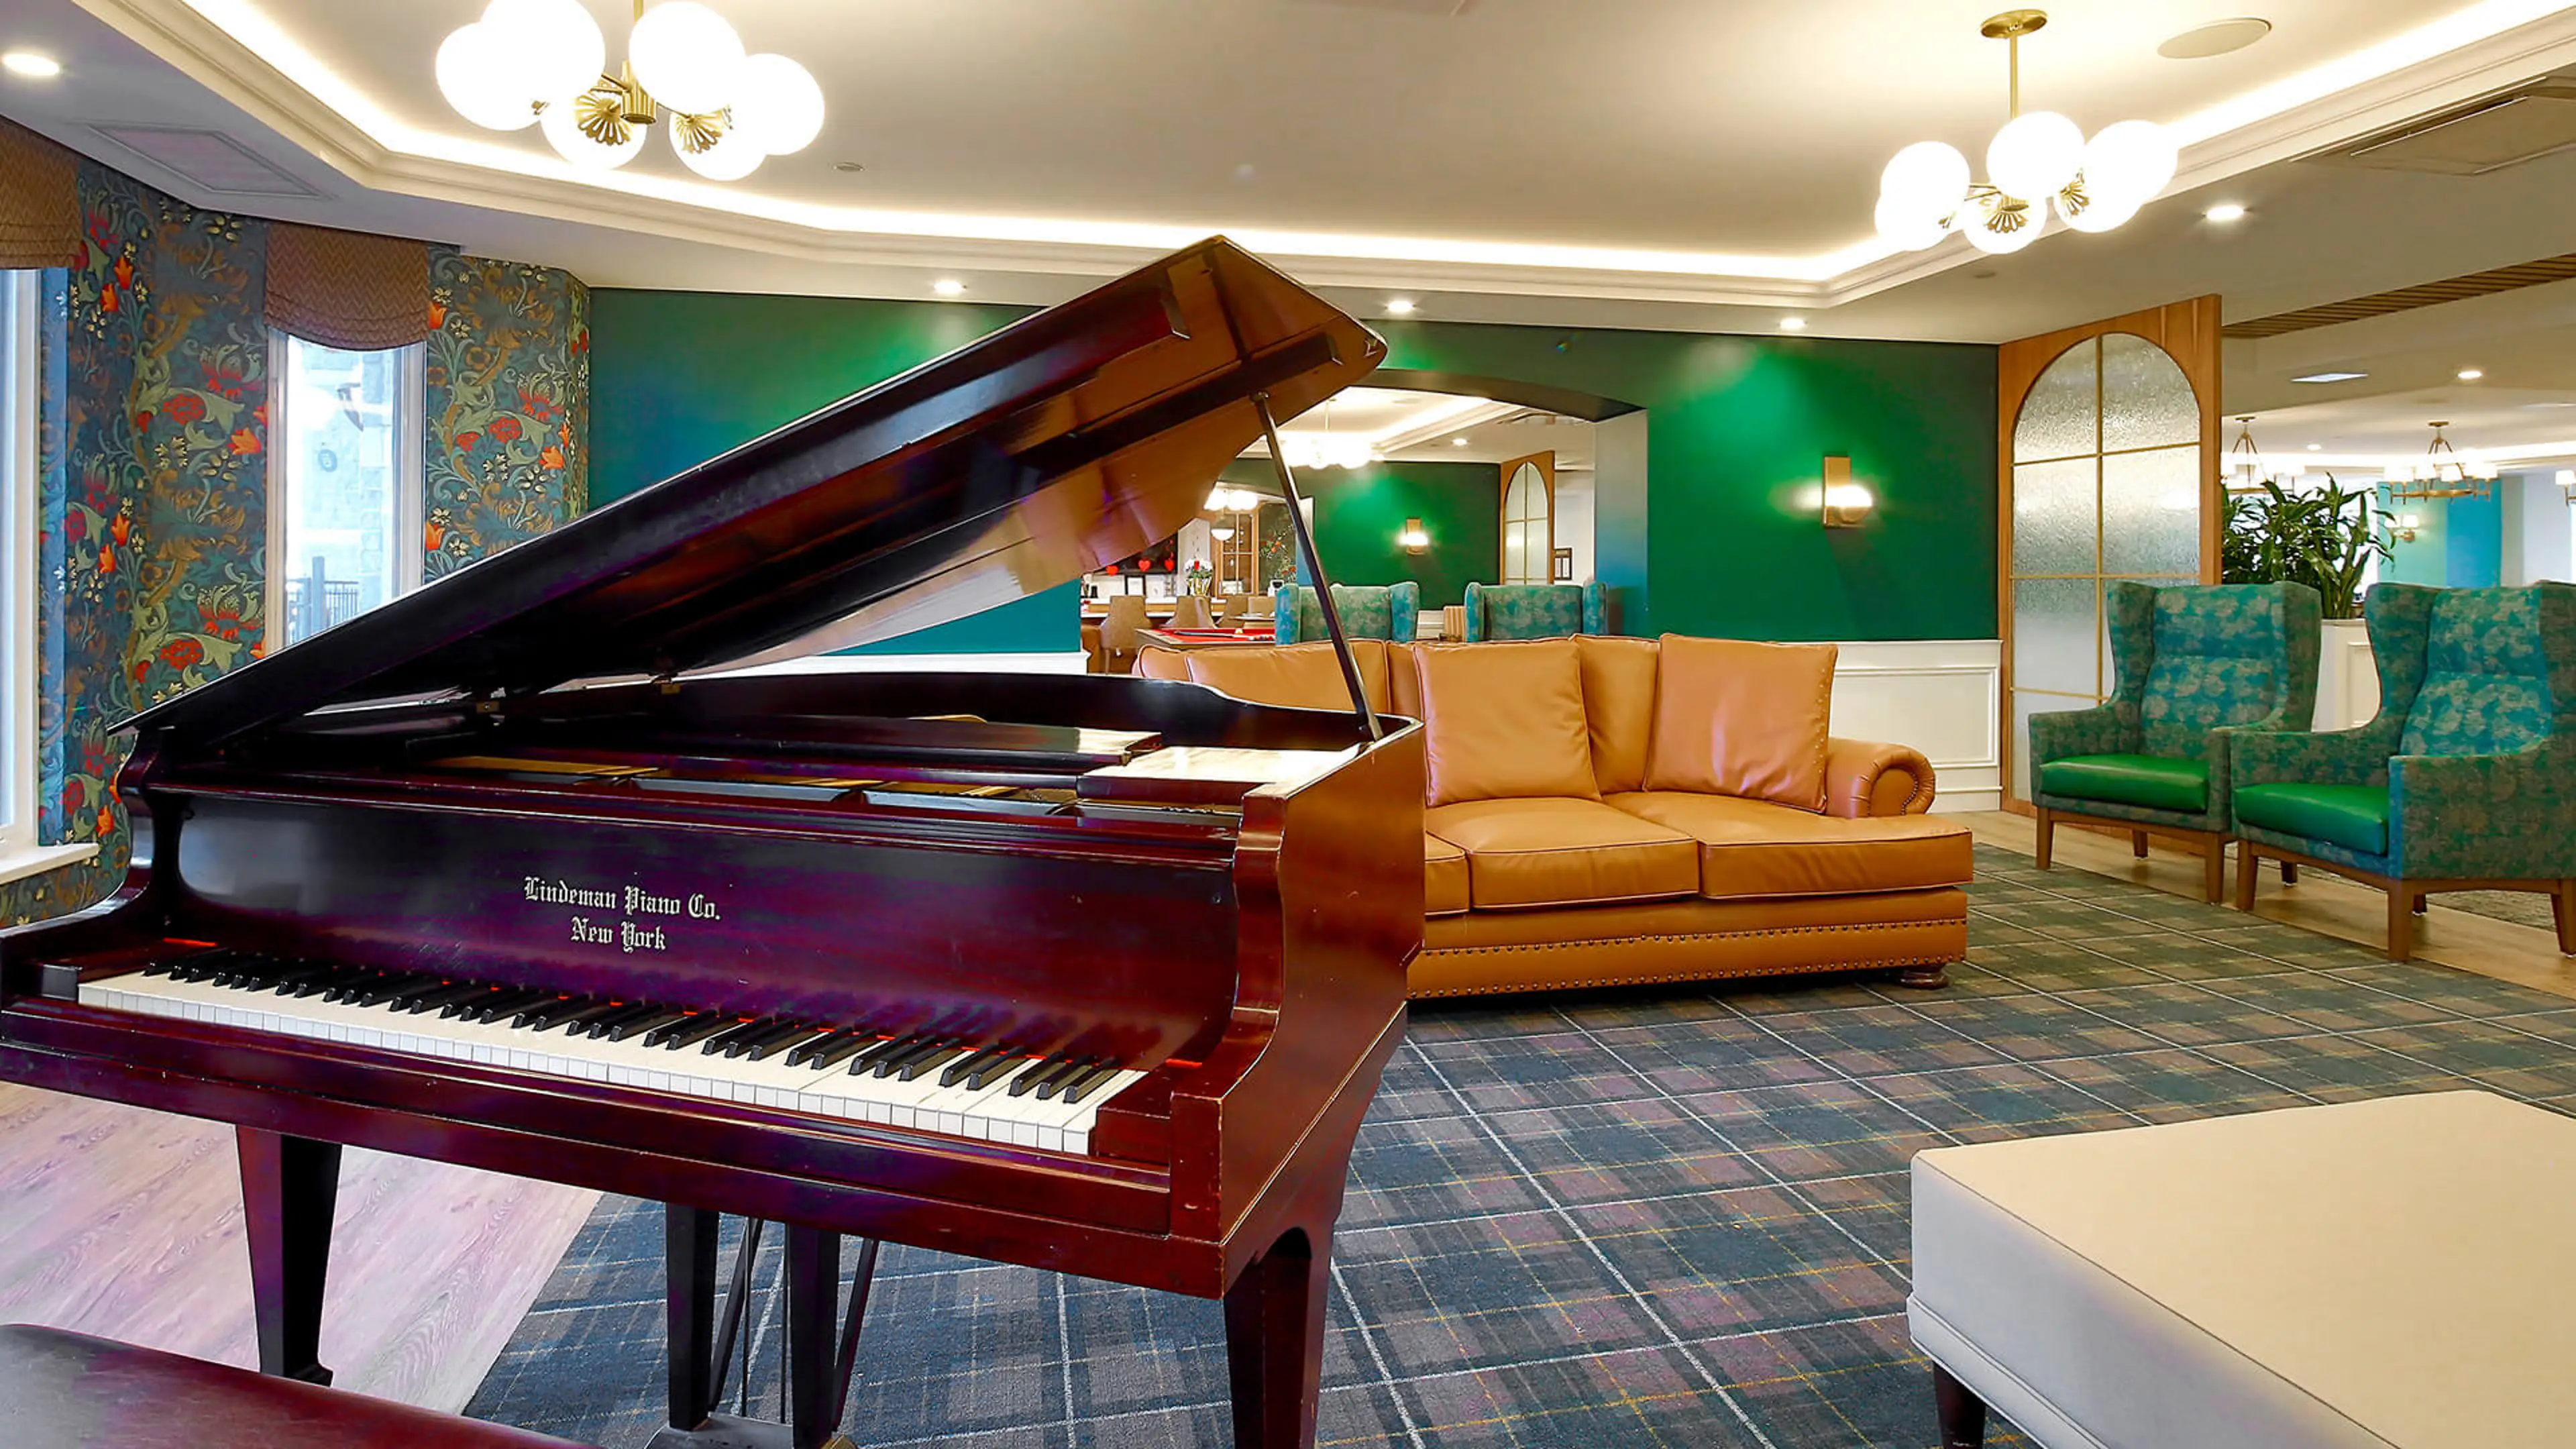 Piano Lounge, Kingsway, Etobicoke